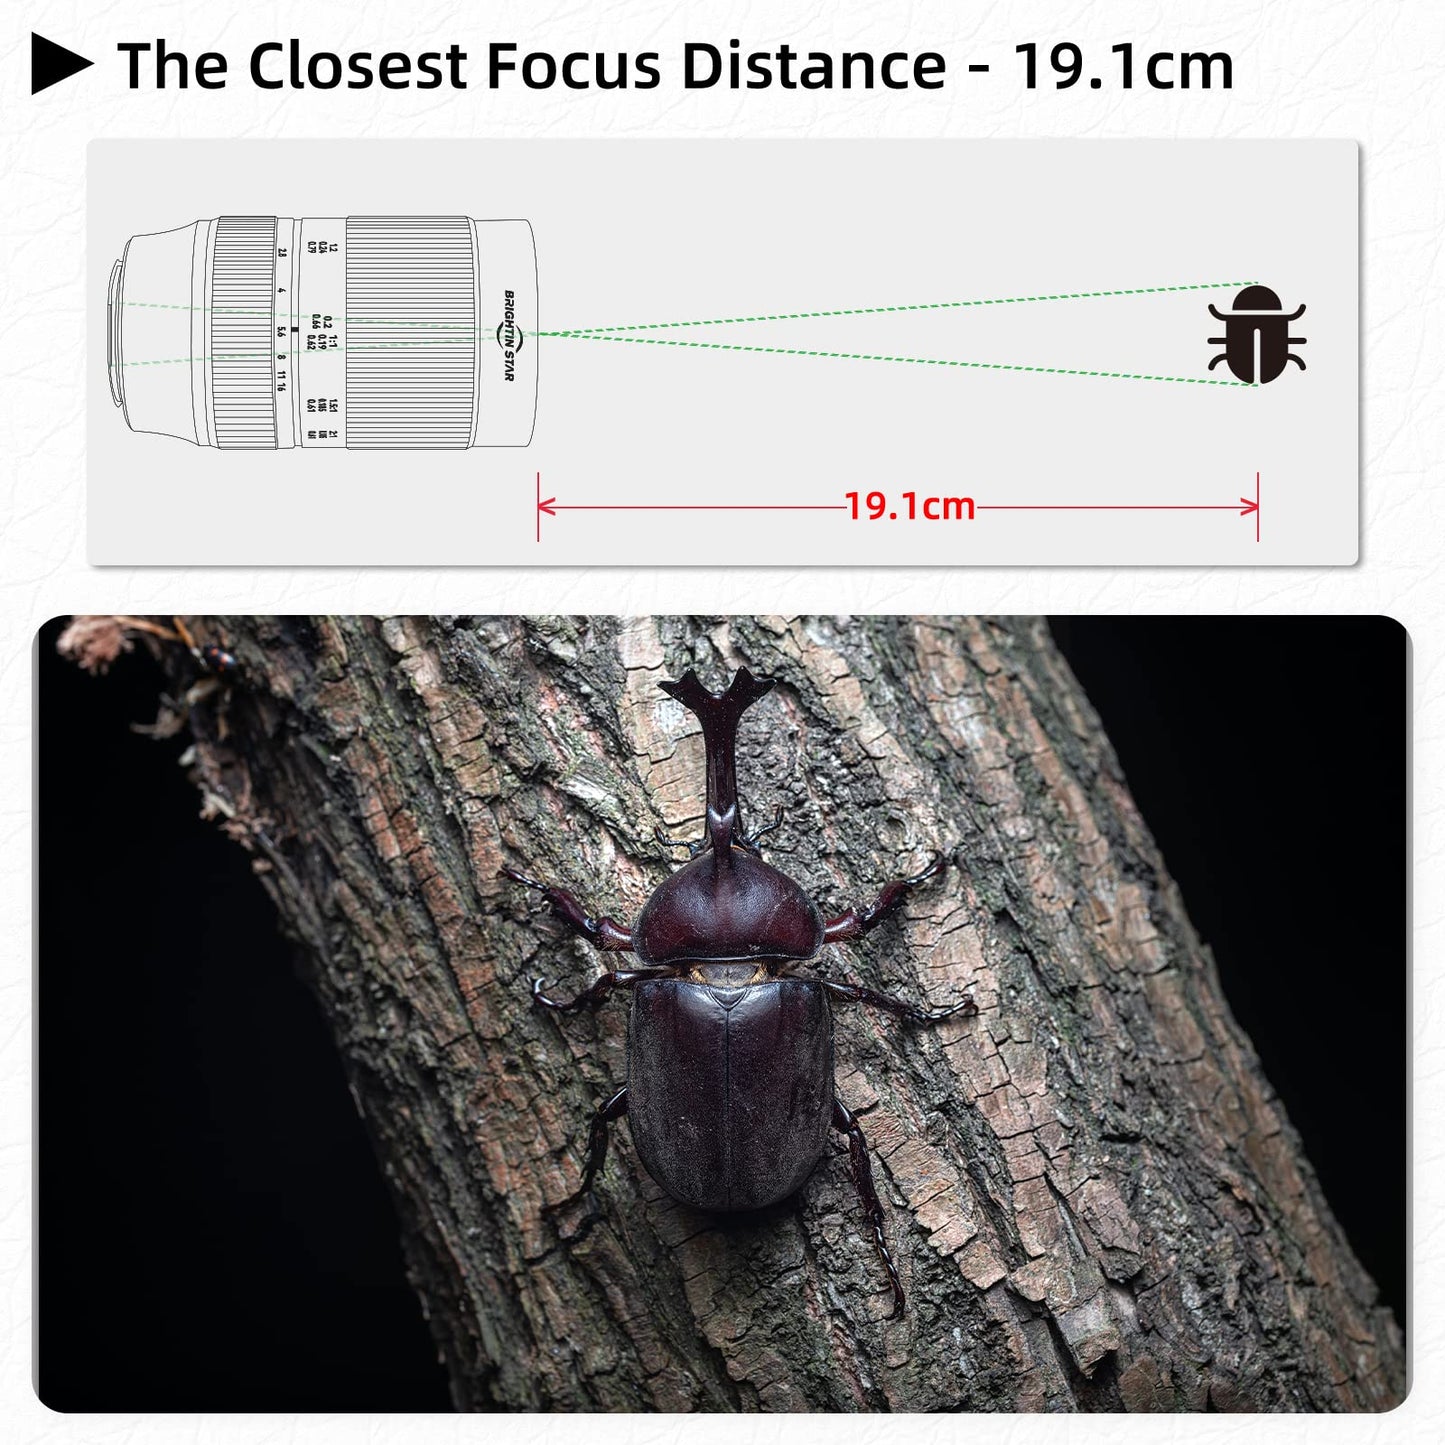 60mm F2.8 2X Macro Magnification Manual Focus Mirrorless Camera Lens, Fit for Fuji X Mount